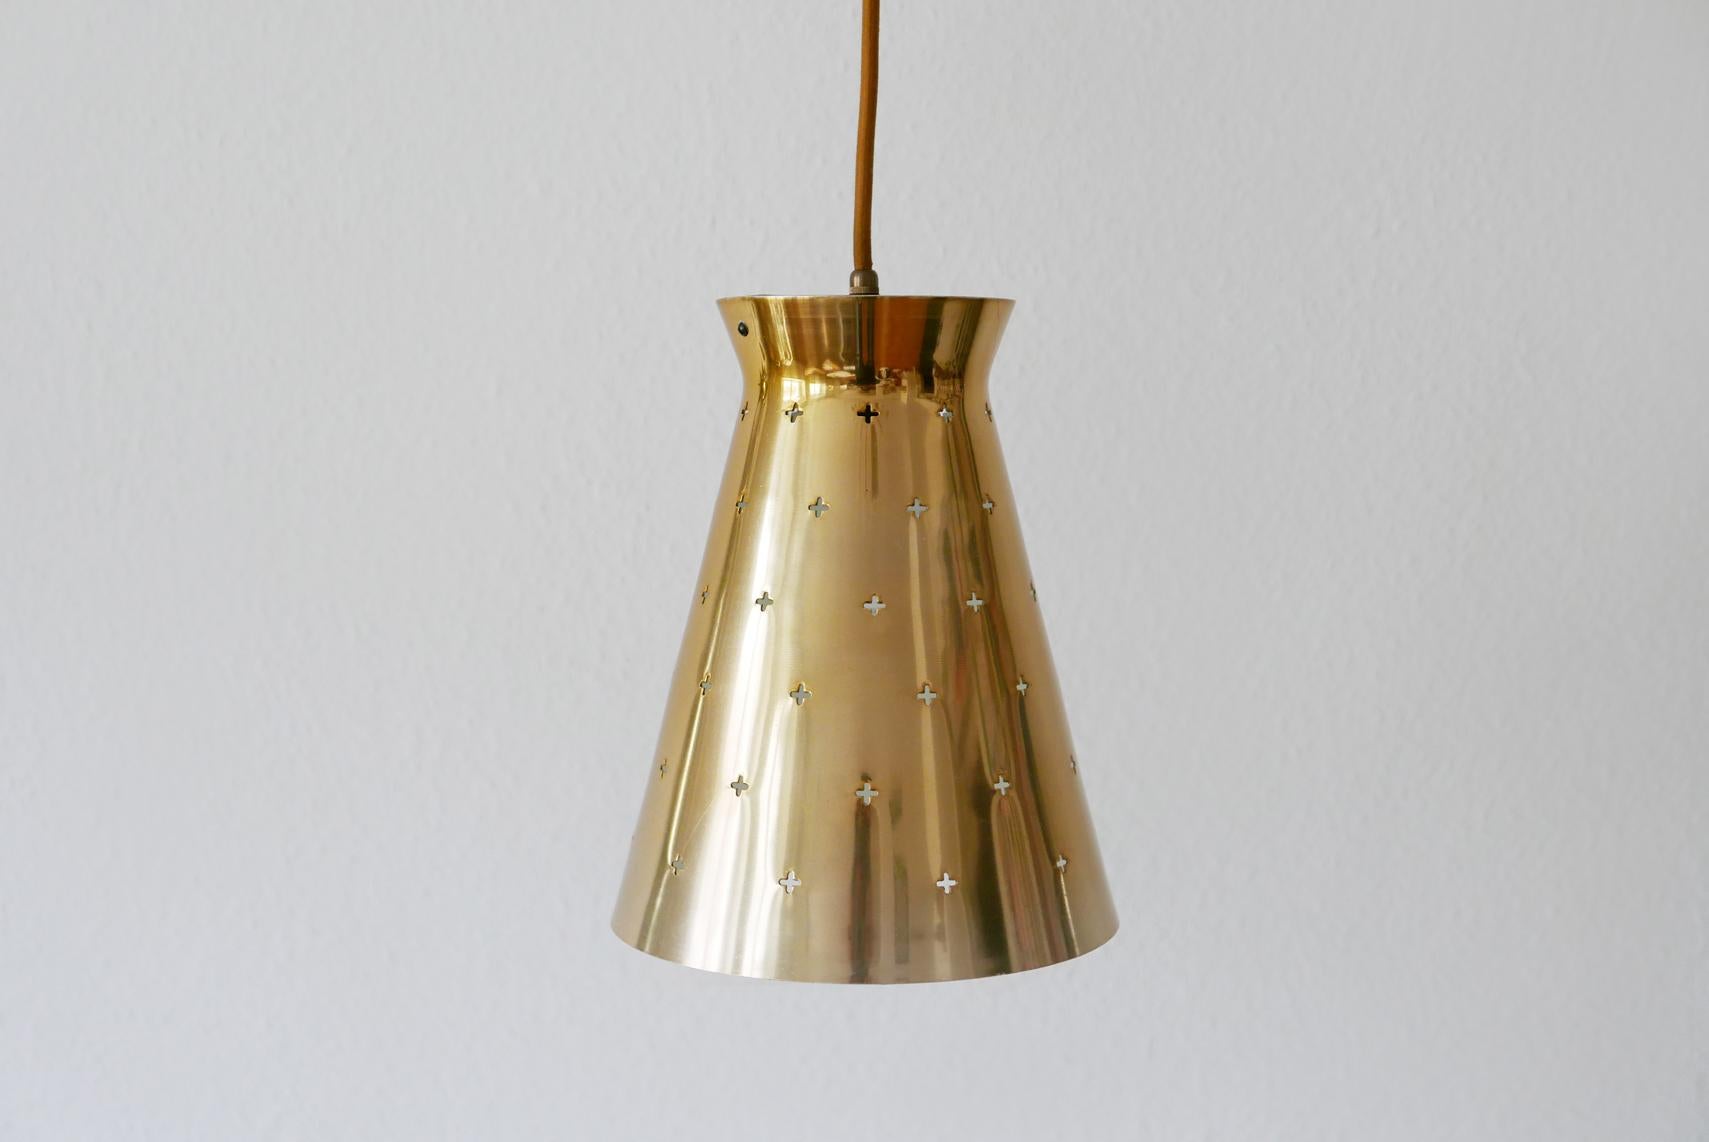 Aluminum Lovely Mid-Century Modern Diabolo Pendant Lamp by Hillebrand, 1950s, Germany For Sale